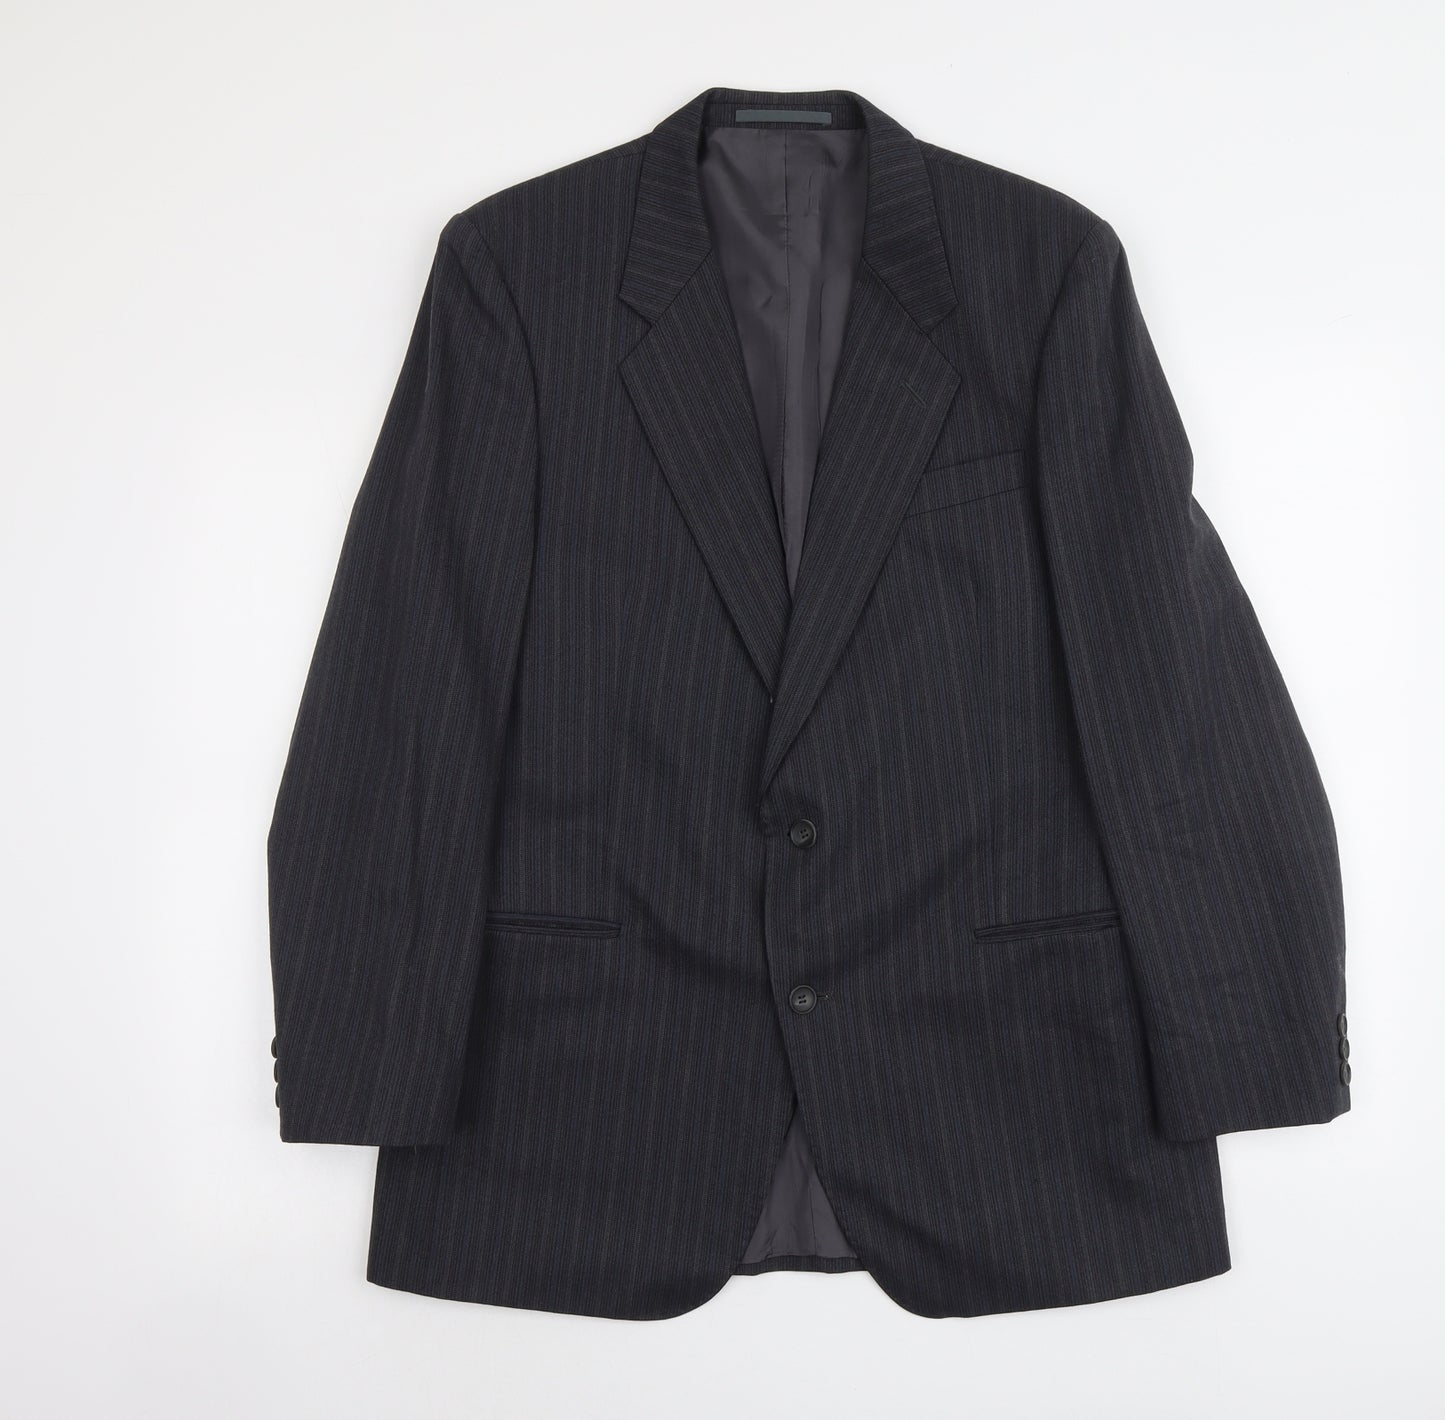 Austin Reed Mens Grey Striped Wool Jacket Suit Jacket Size M Regular